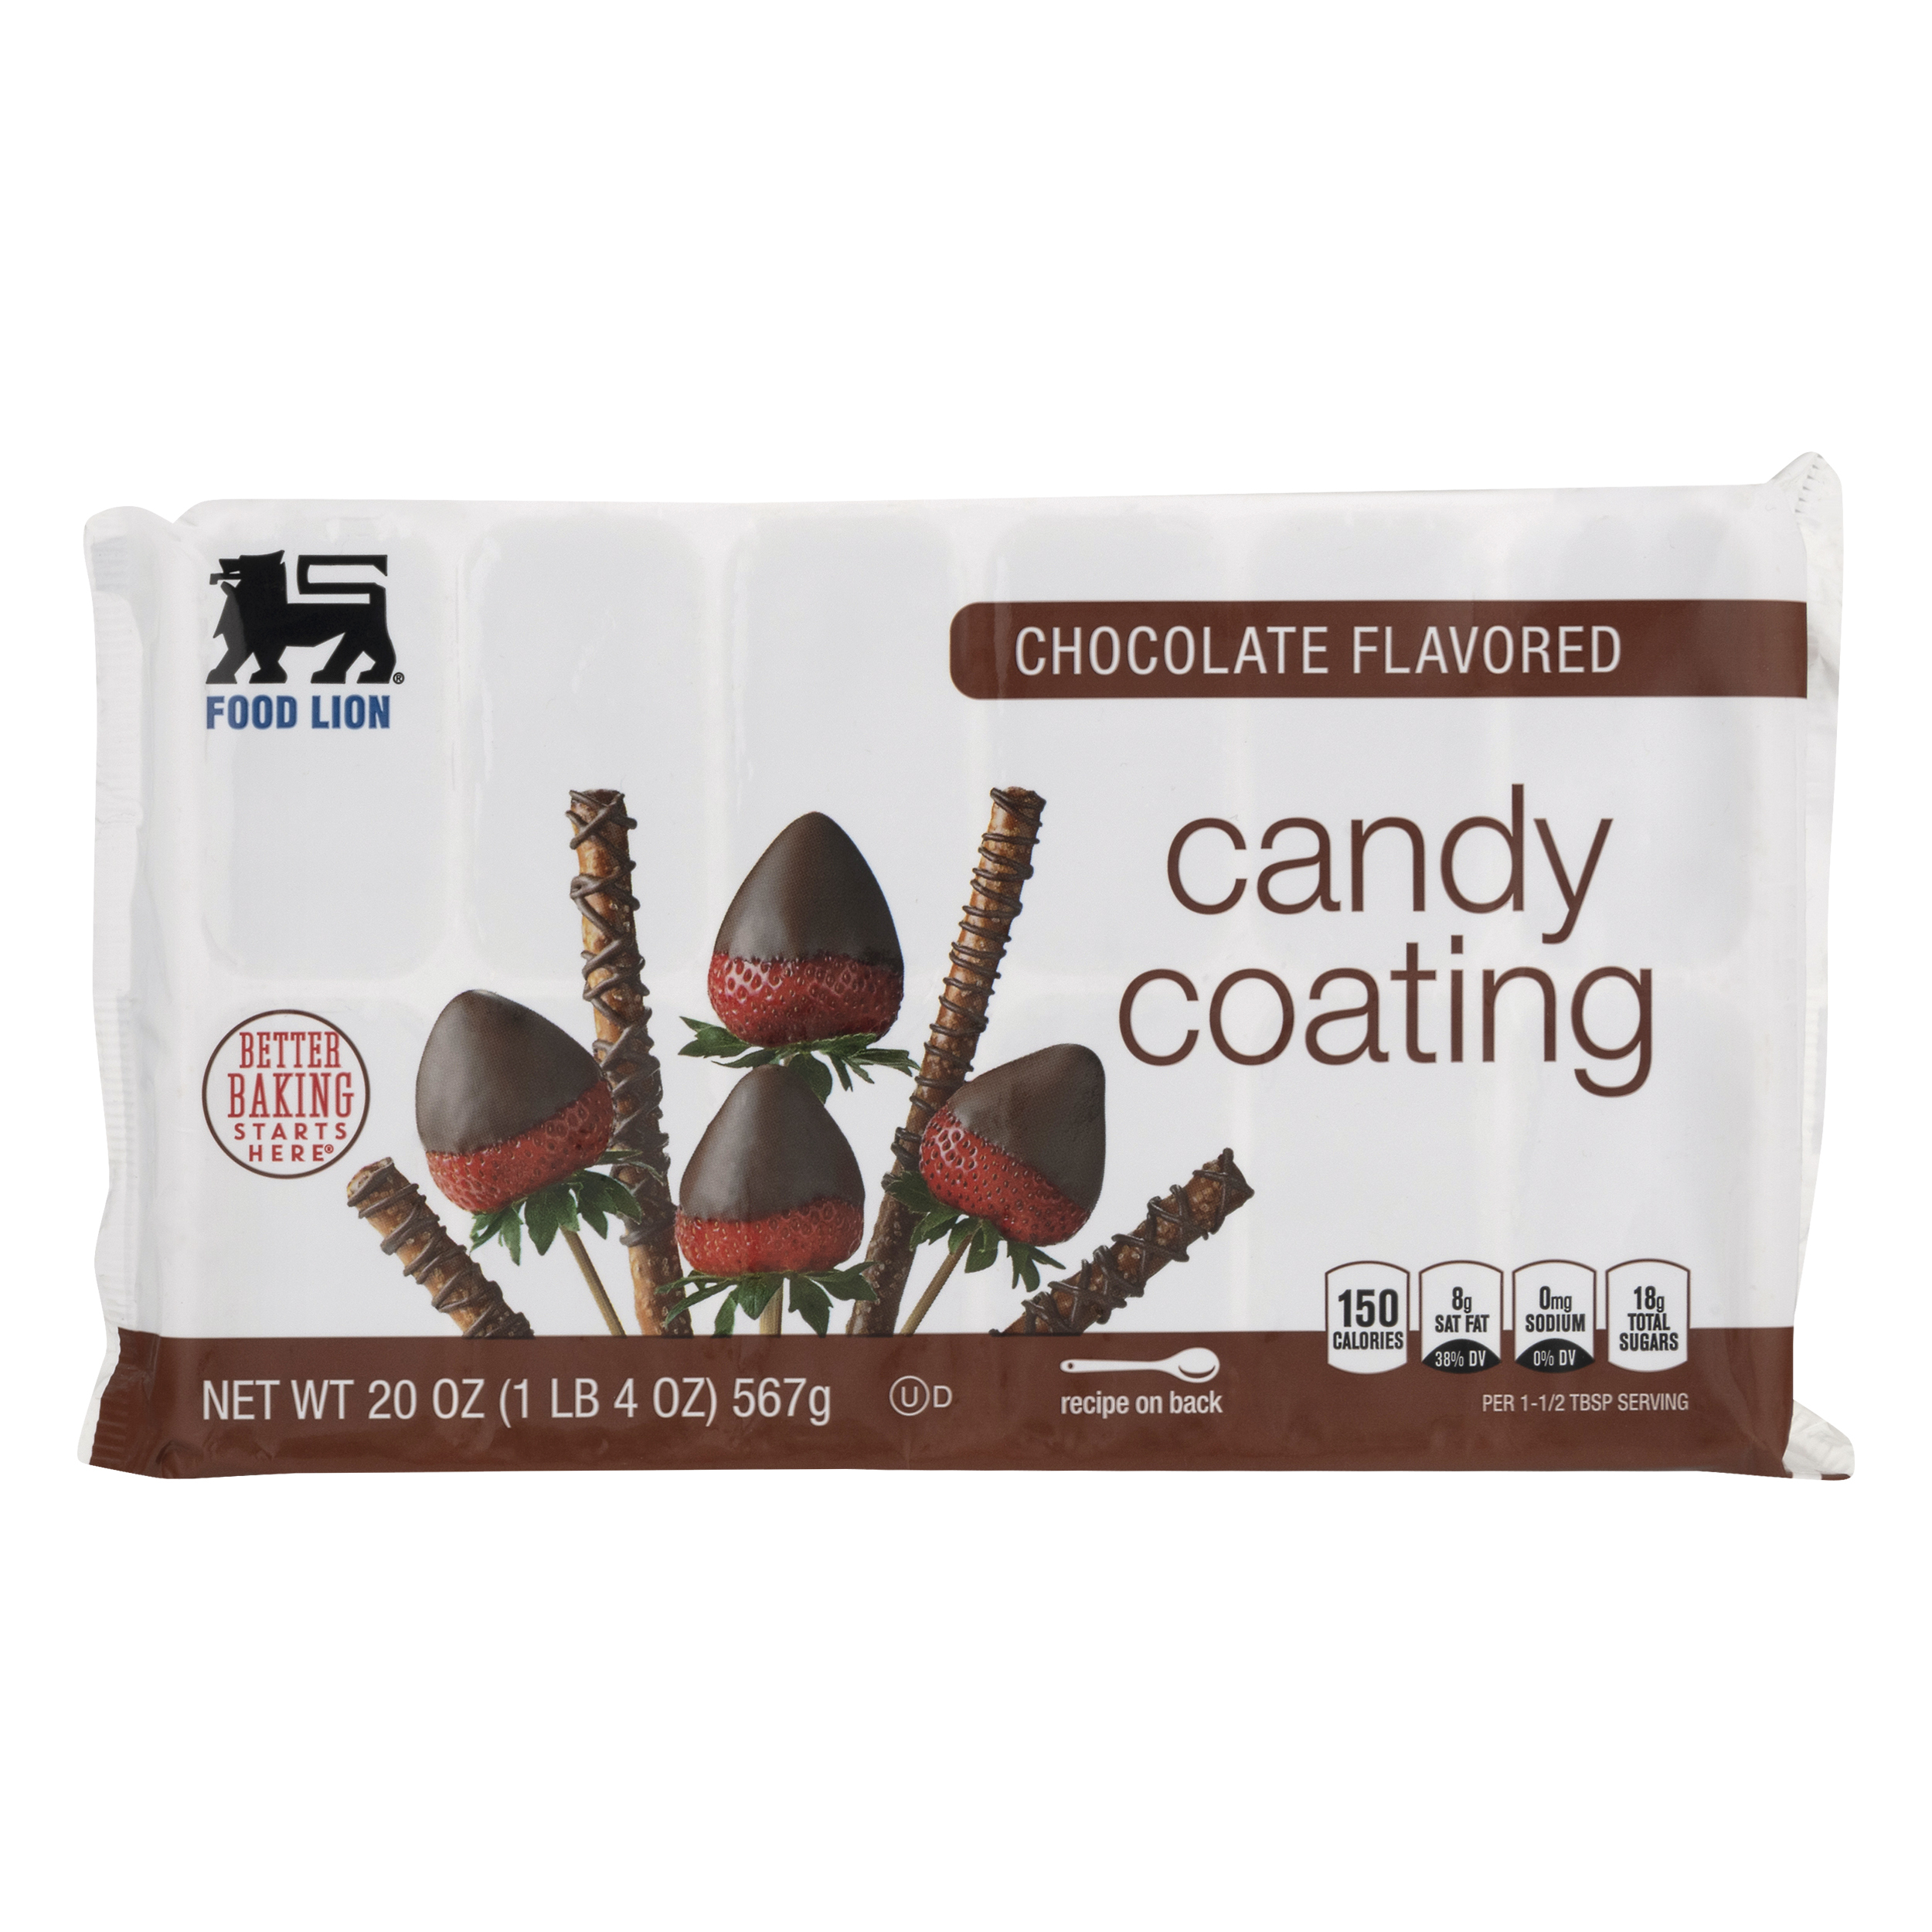 Chocolate Candy Coating